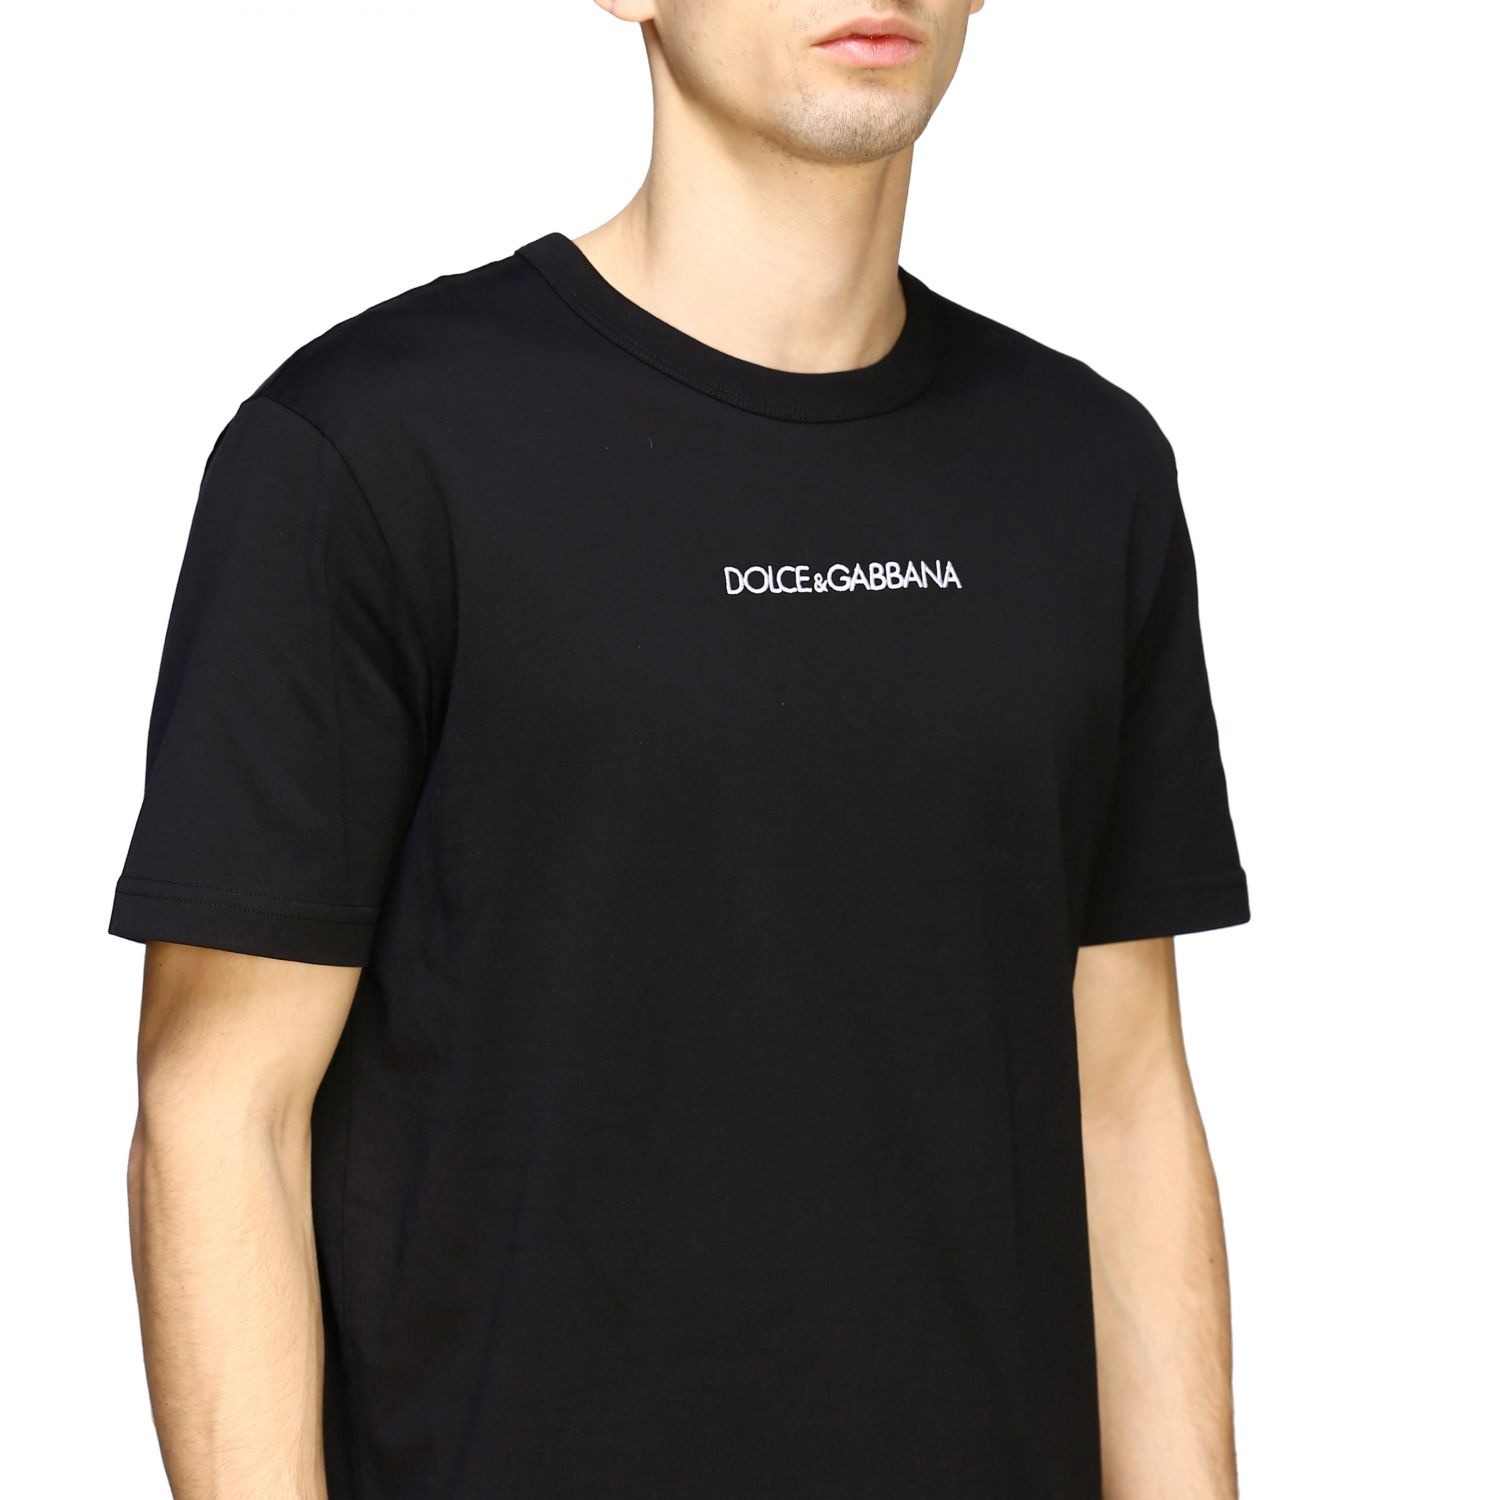 Dolce & Gabbana basic short-sleeved T-shirt with logo